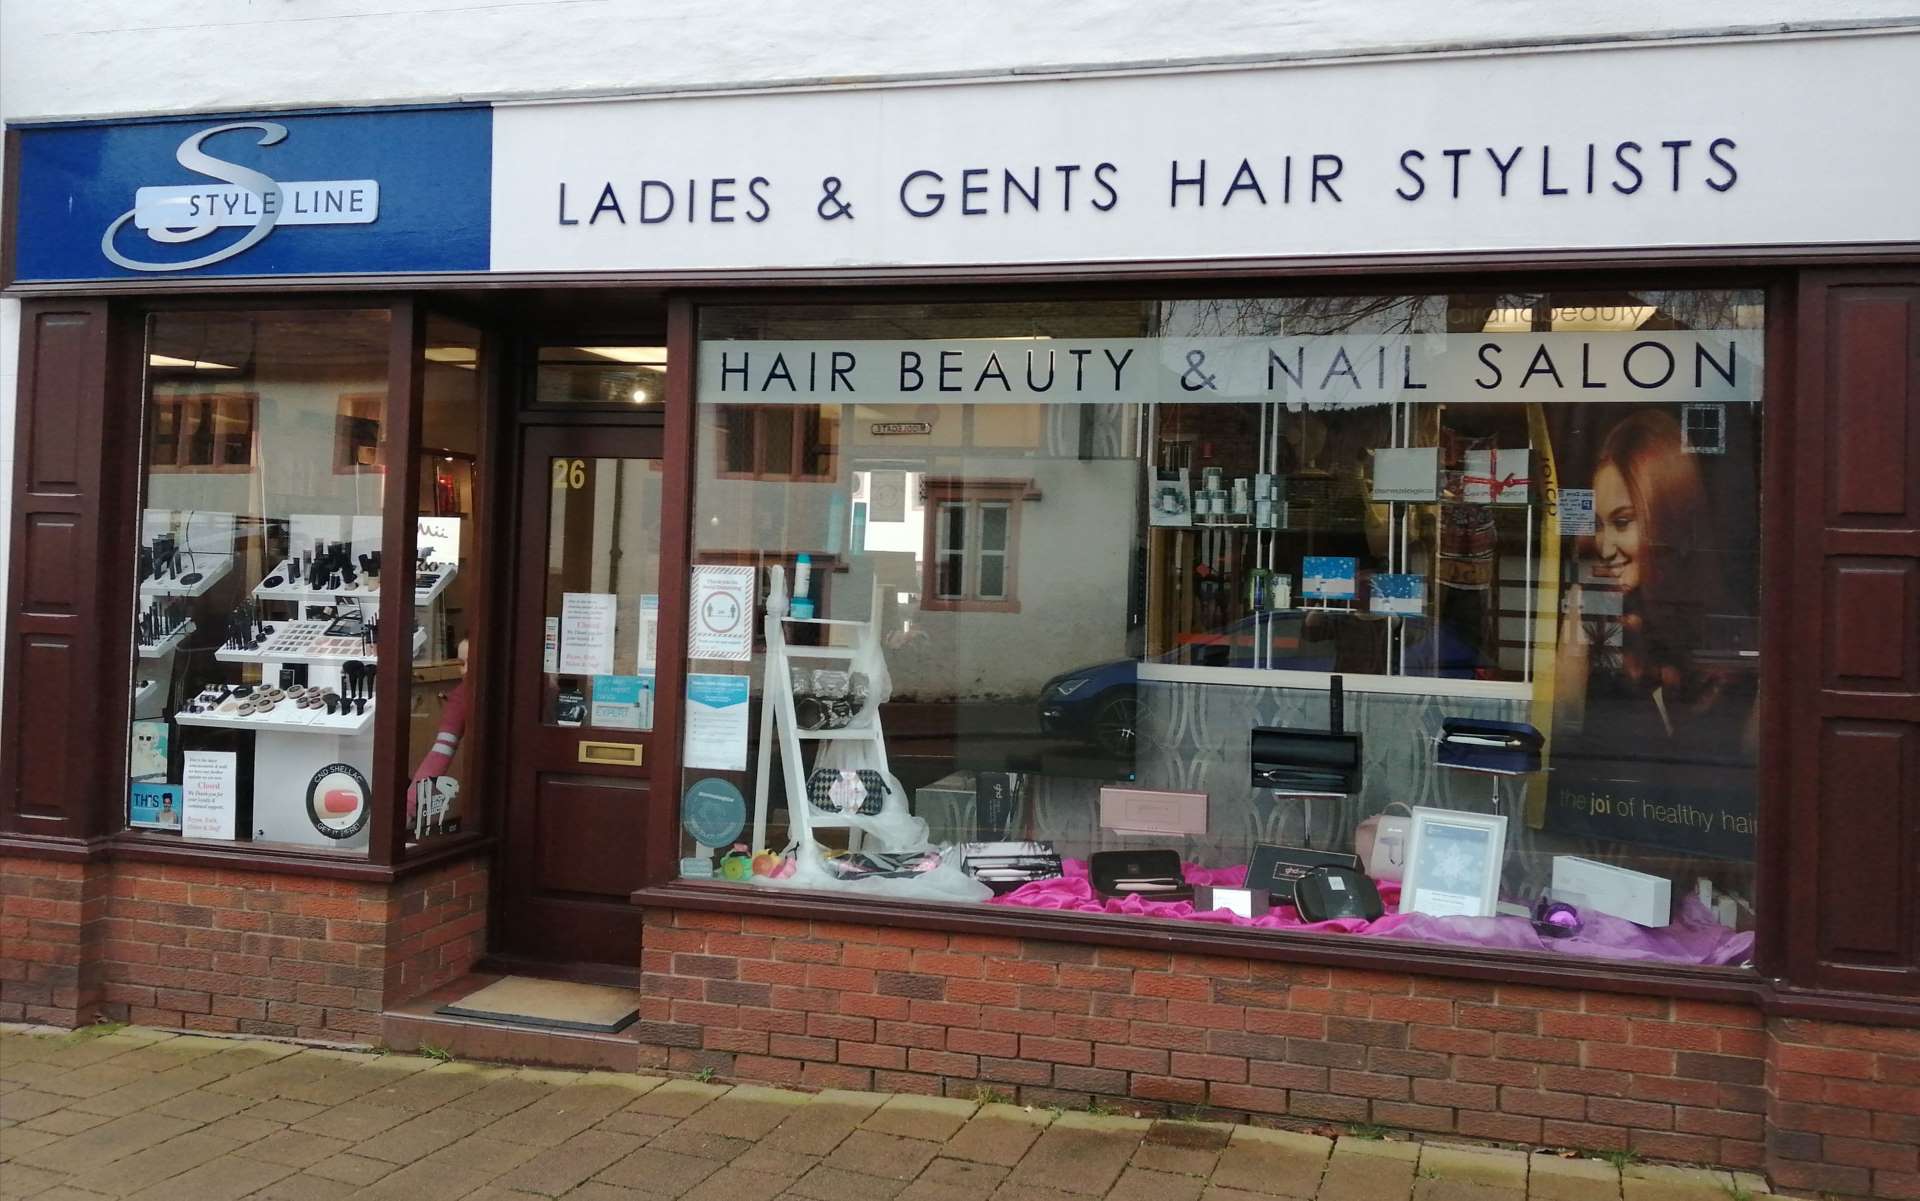 Style Line Hair Salon in Penrith, Cumbria